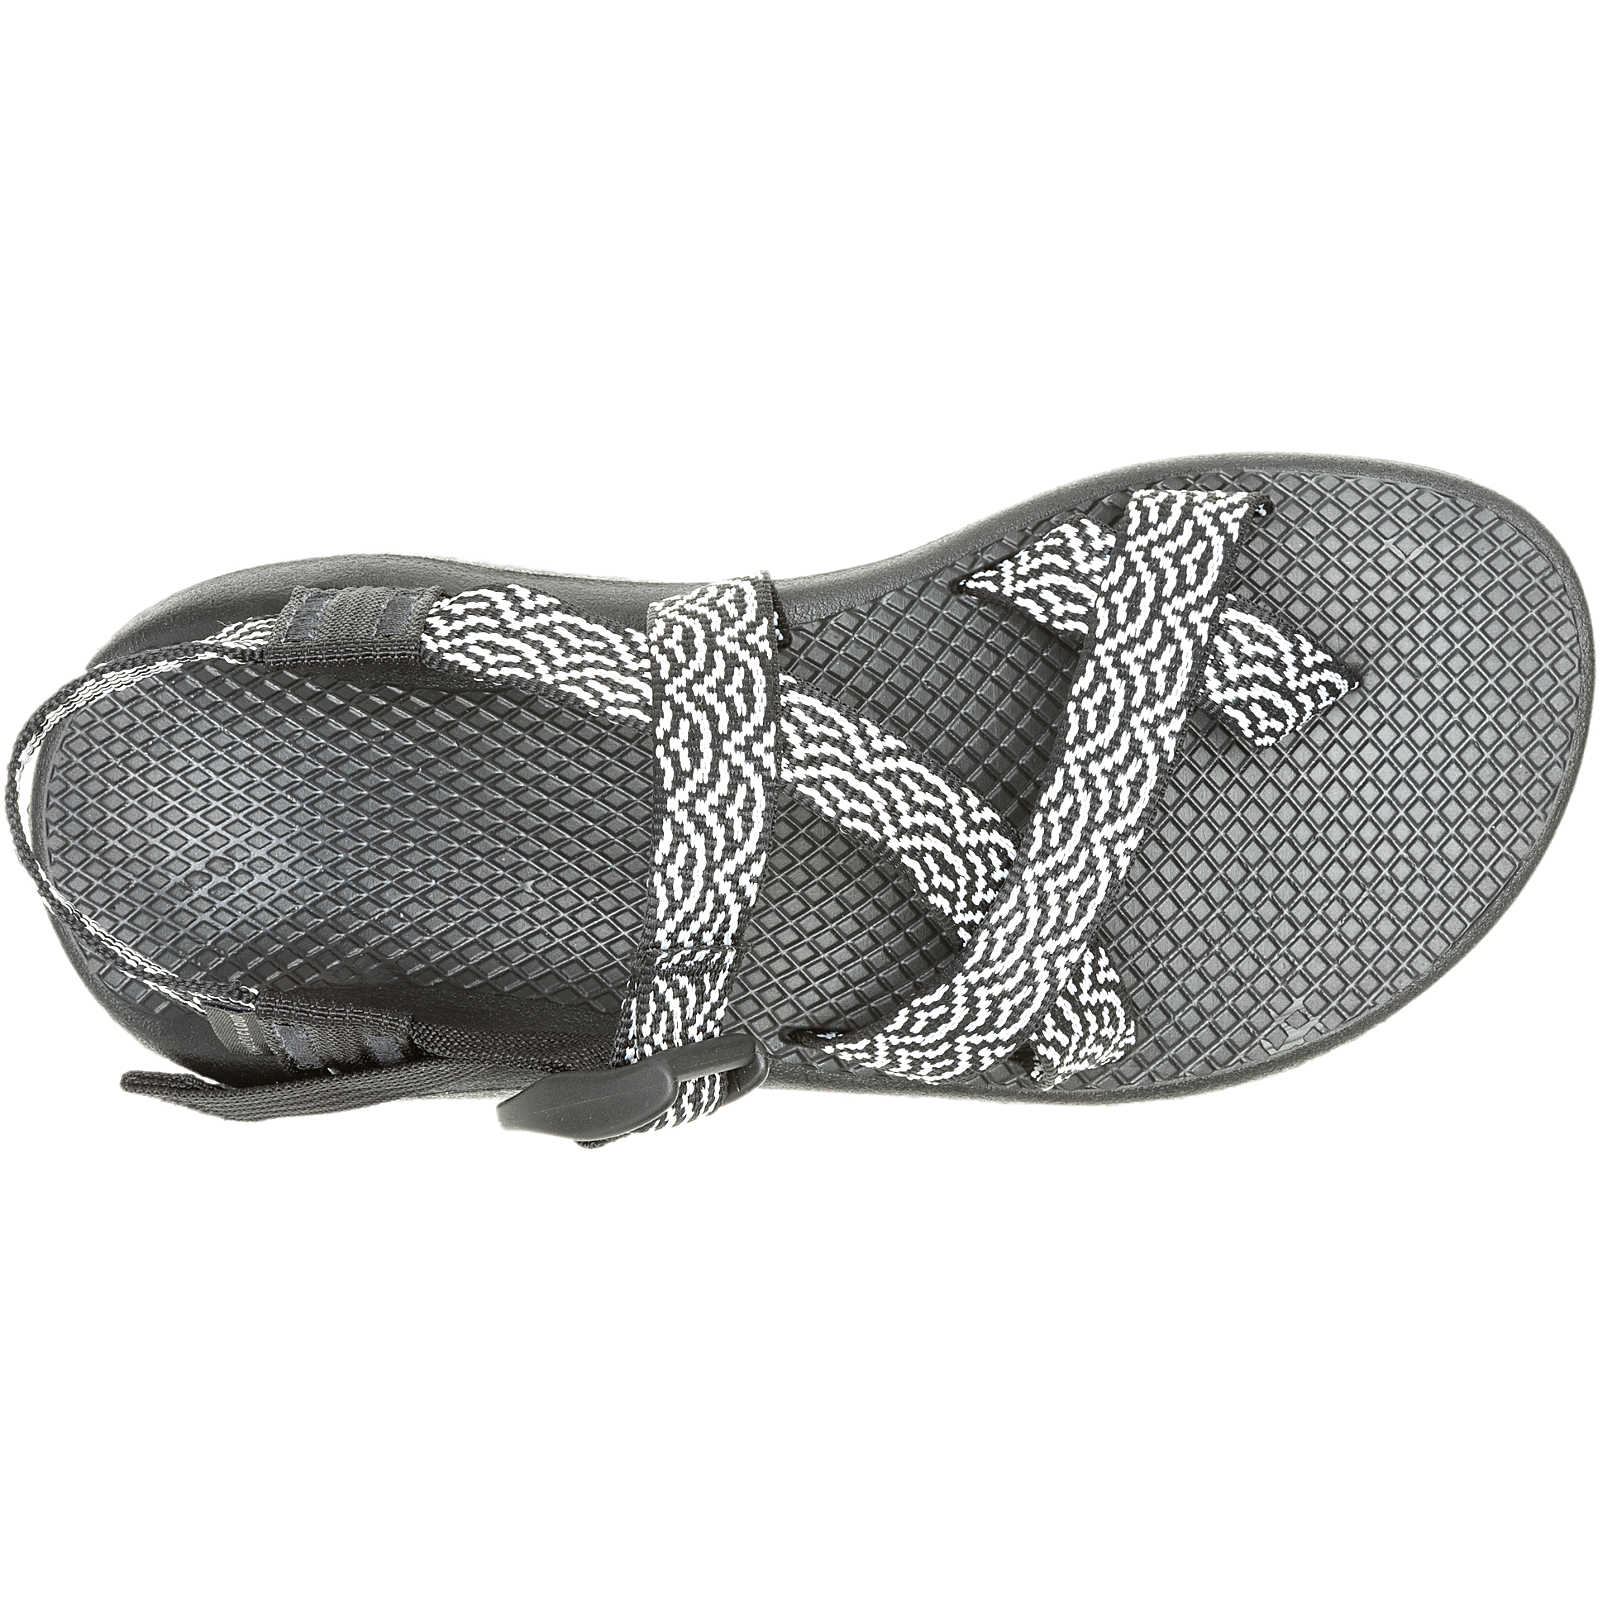 ZCloud 2 Sandals for Women - S24